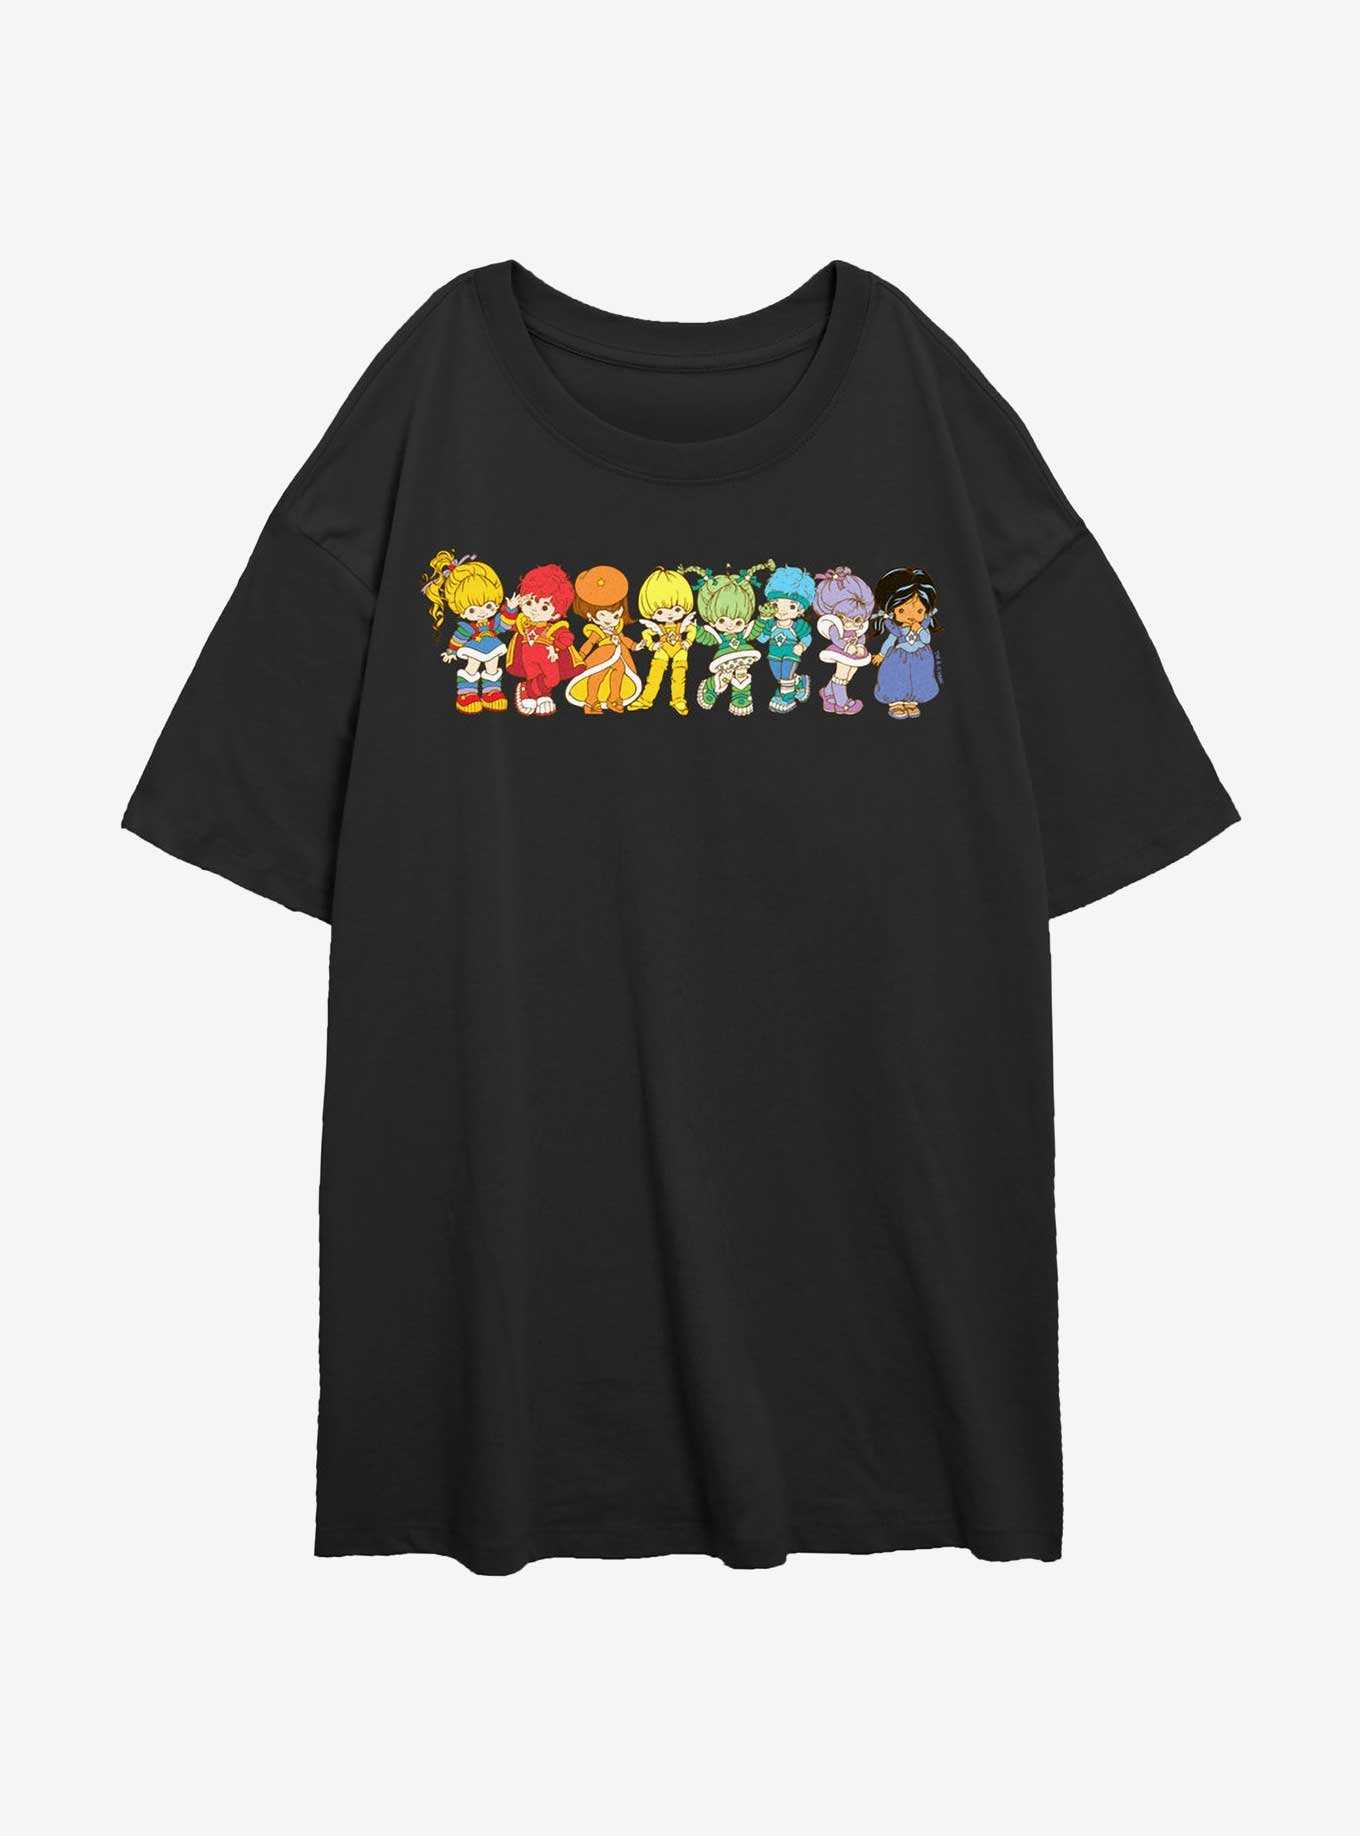 Rainbow Brite Line Up Girls Oversized T-Shirt, , hi-res